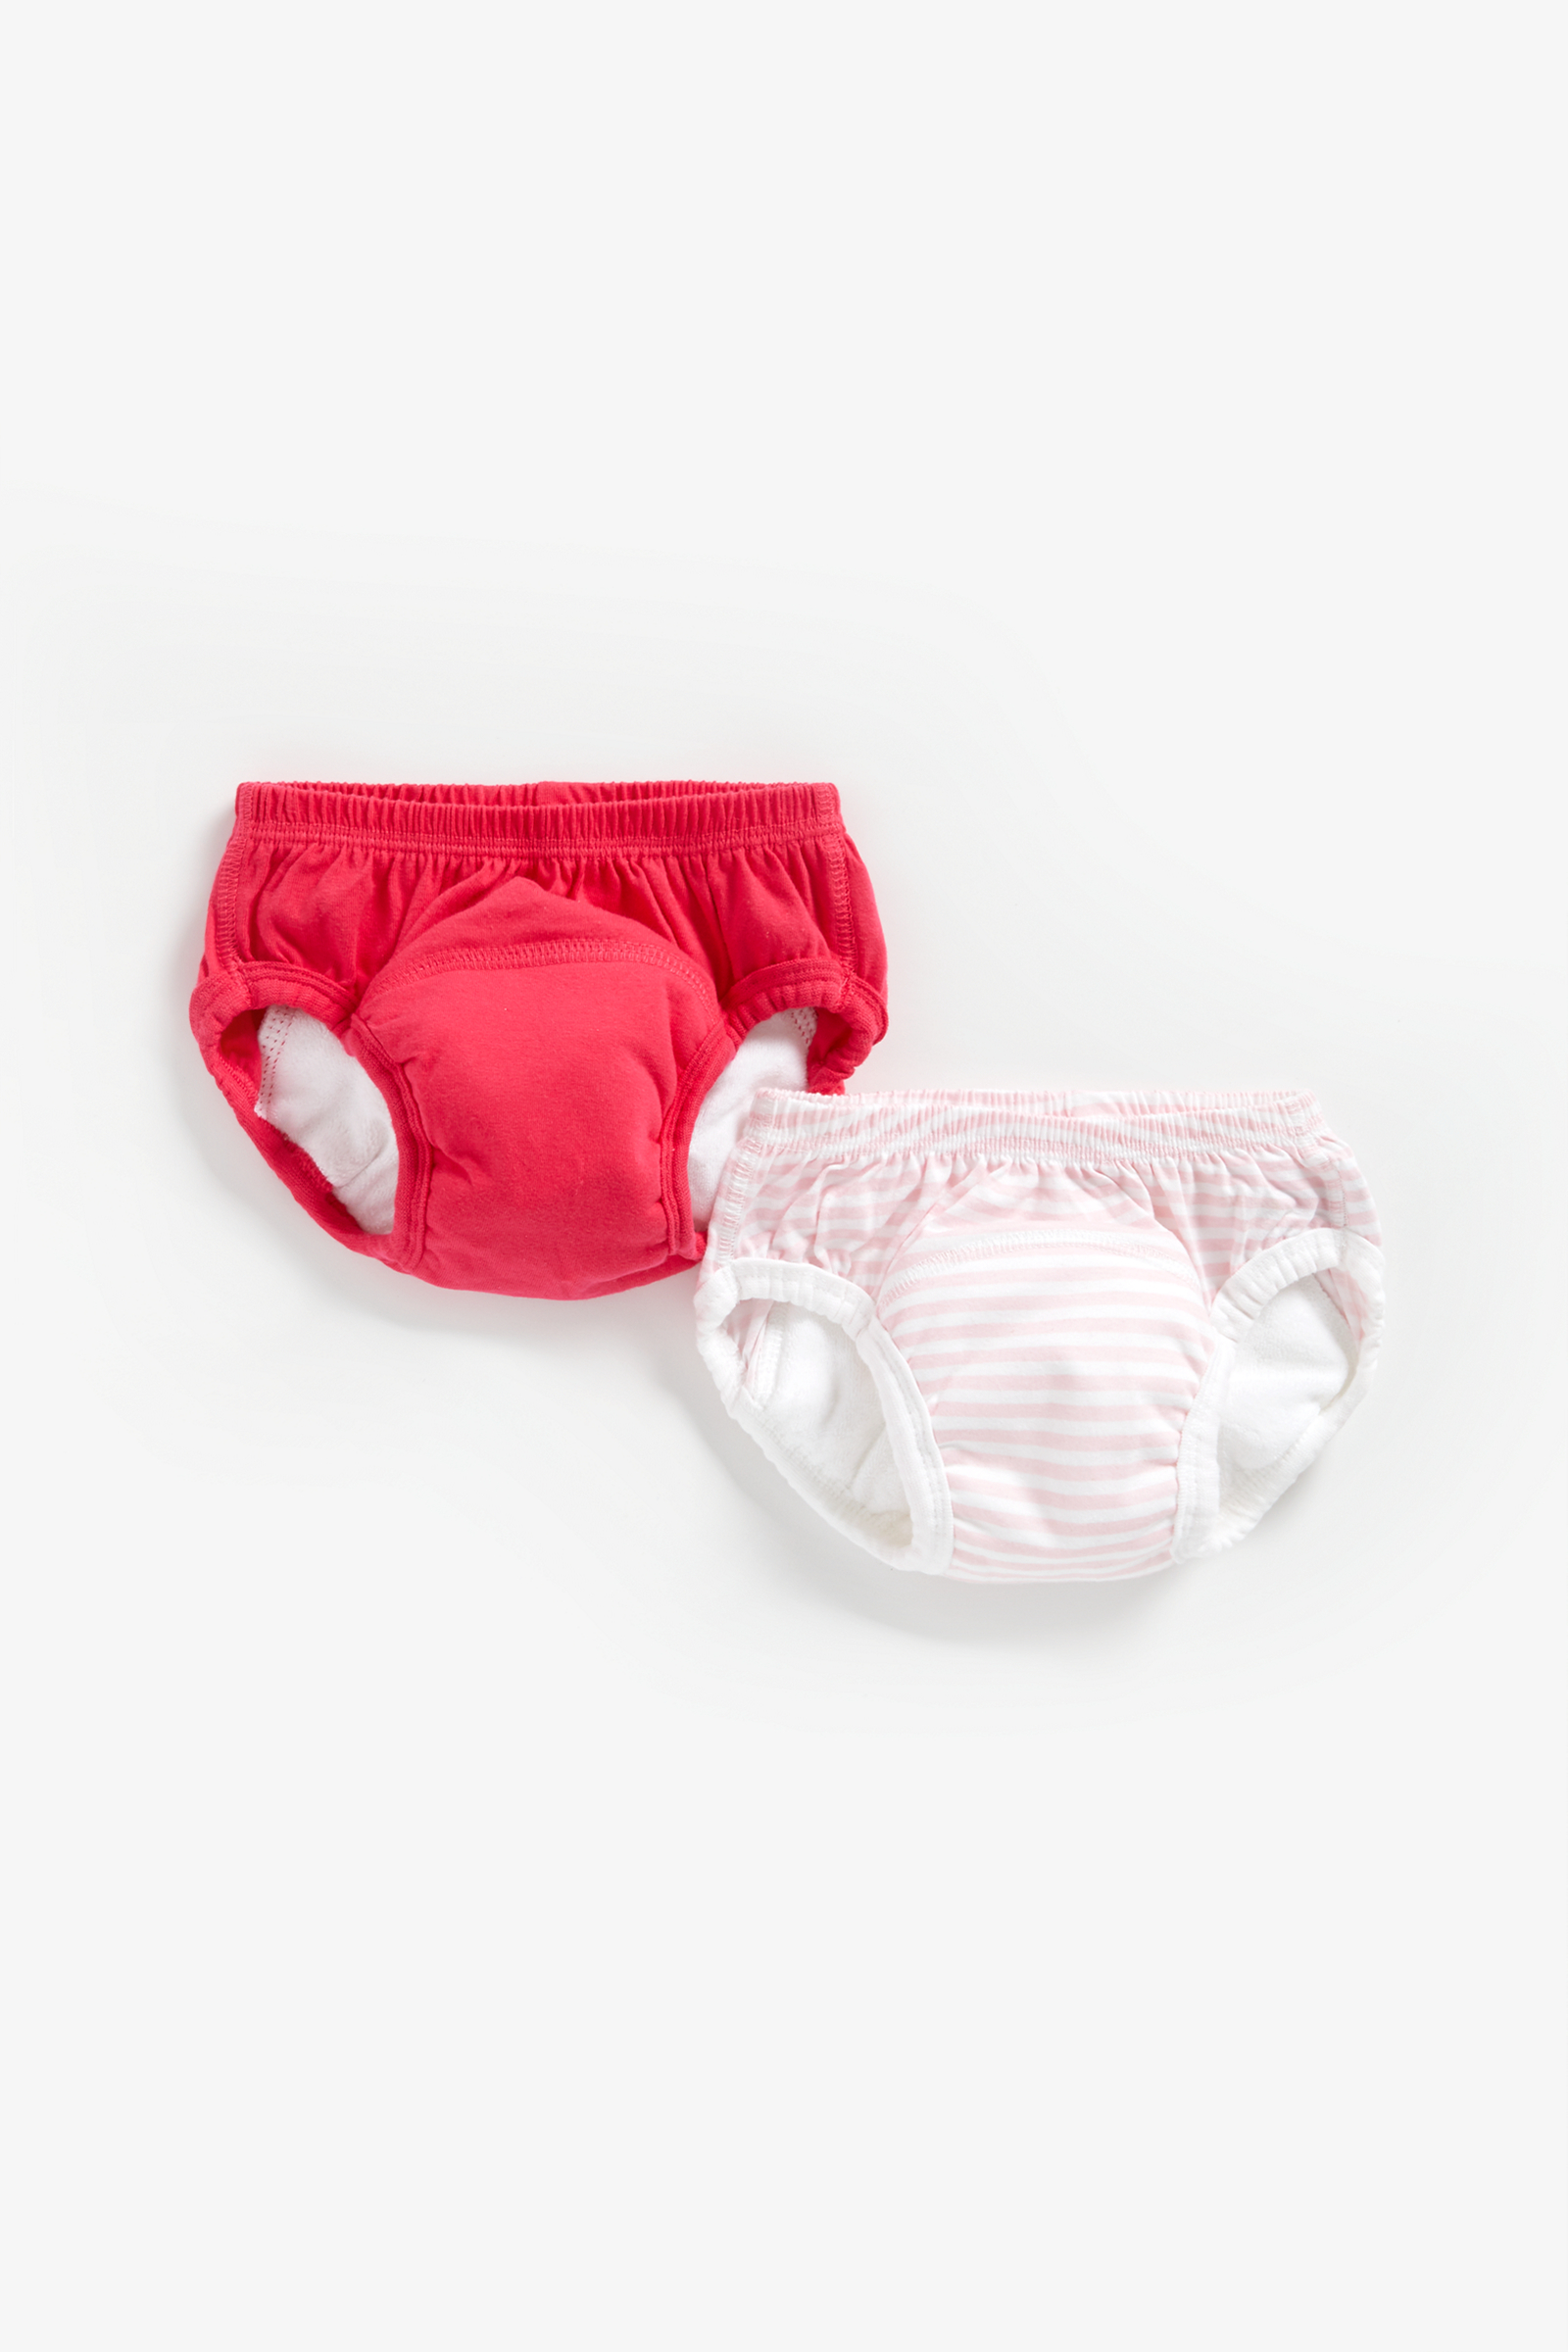 Bambino Mio, Potty Training Pants, Pink Elephant, 18-24 Months :  : Fashion